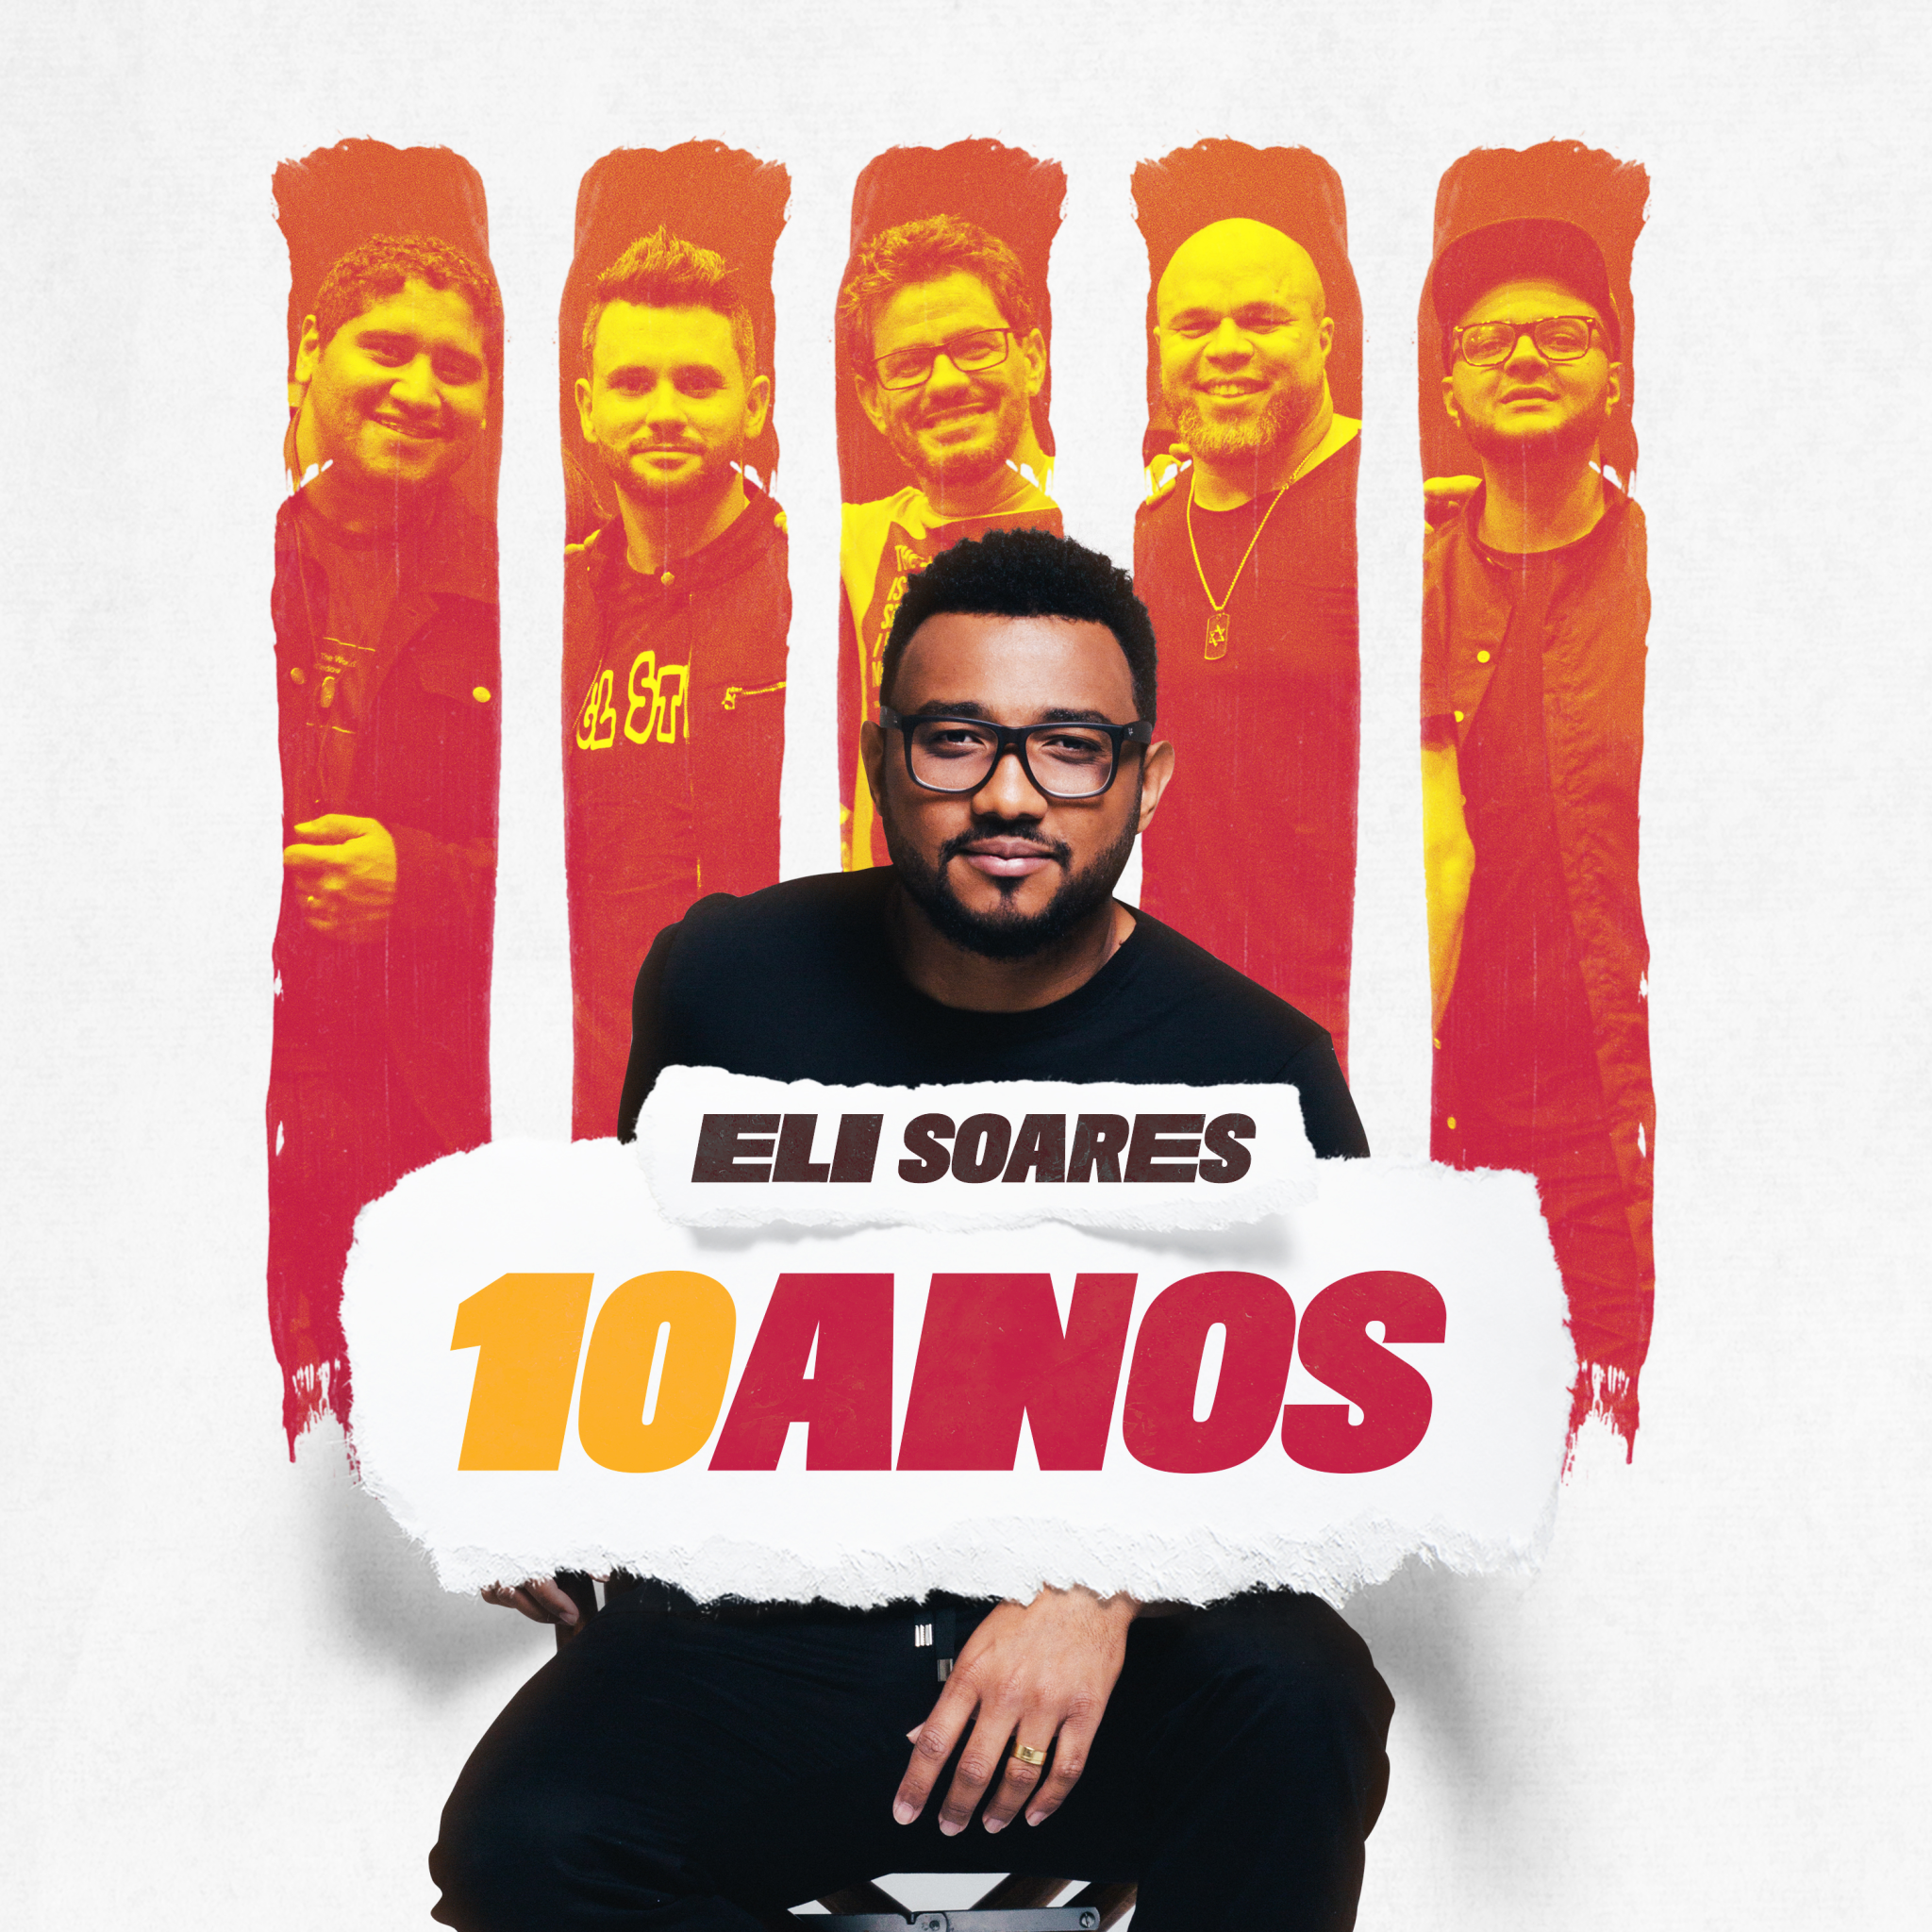 Eli Soares apresenta o álbum “Eli Soares – 10 Anos”.